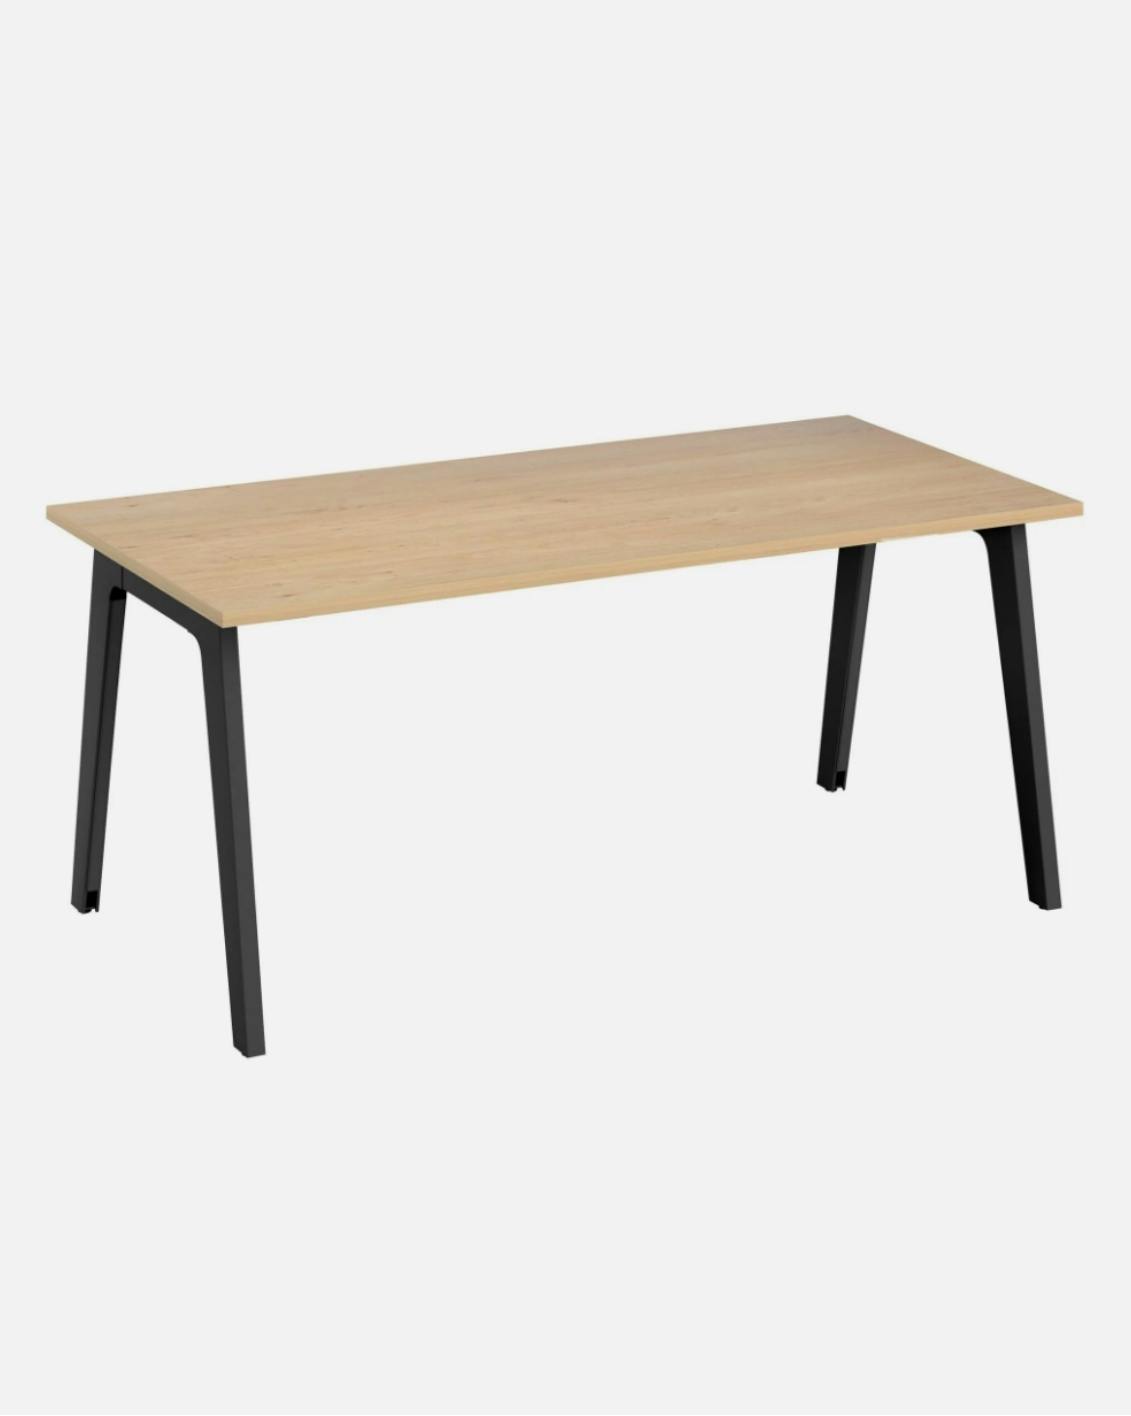 REL015 Natural Wooden desk with black metal legs